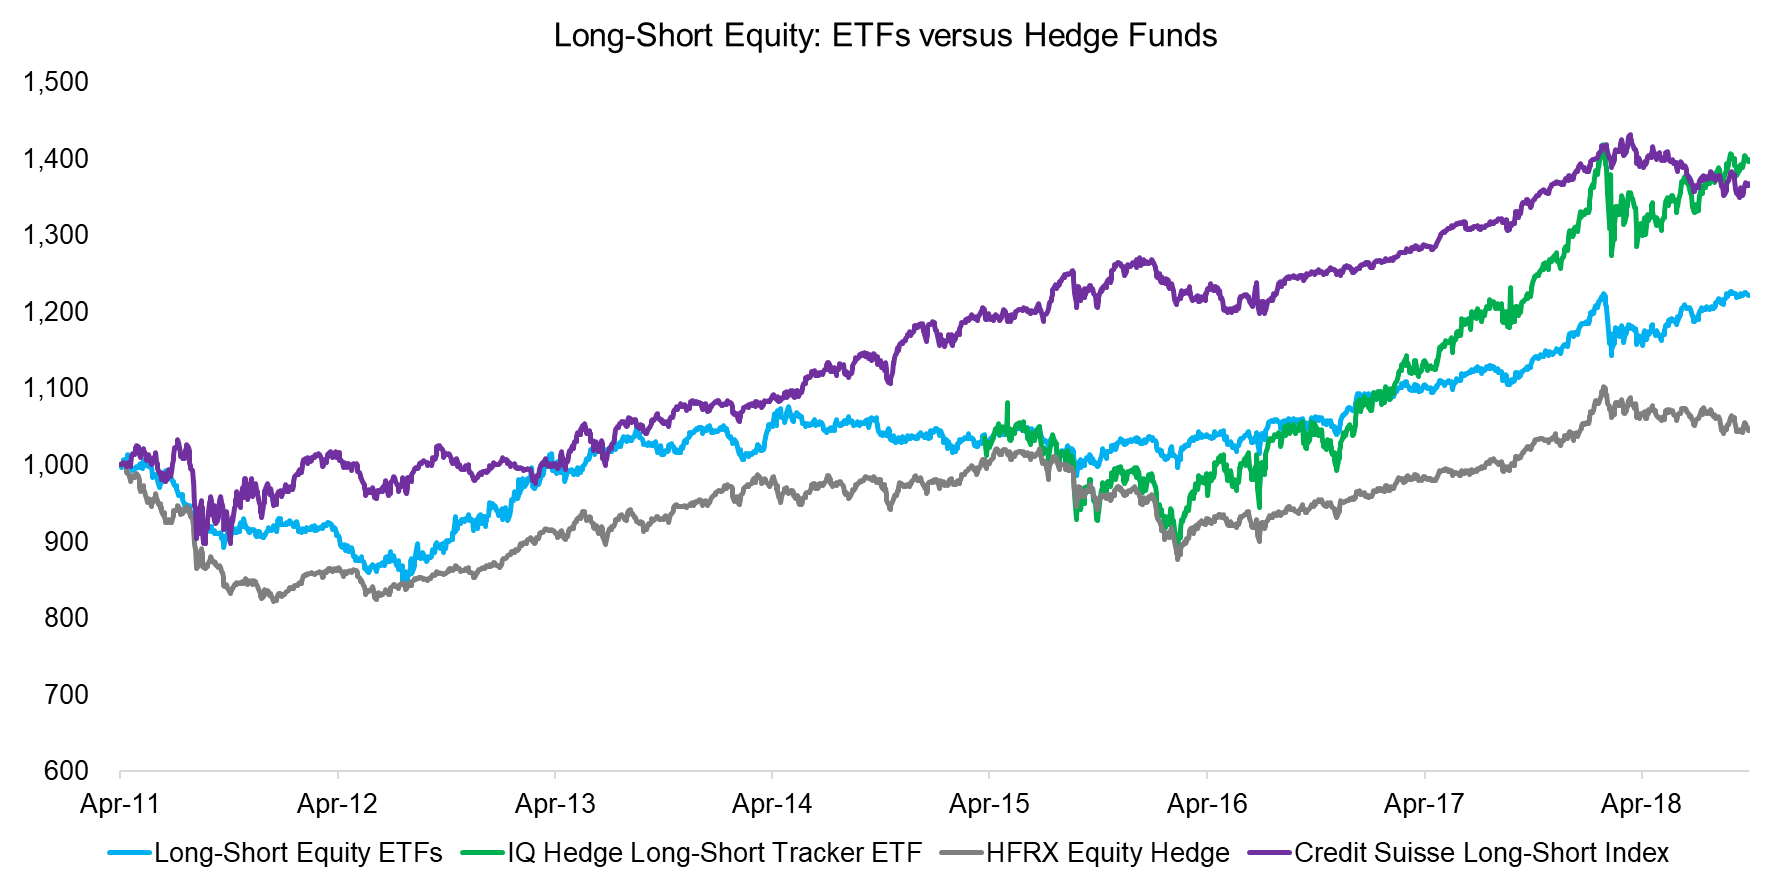 Long-Short Equity ETFs versus Hedge Funds